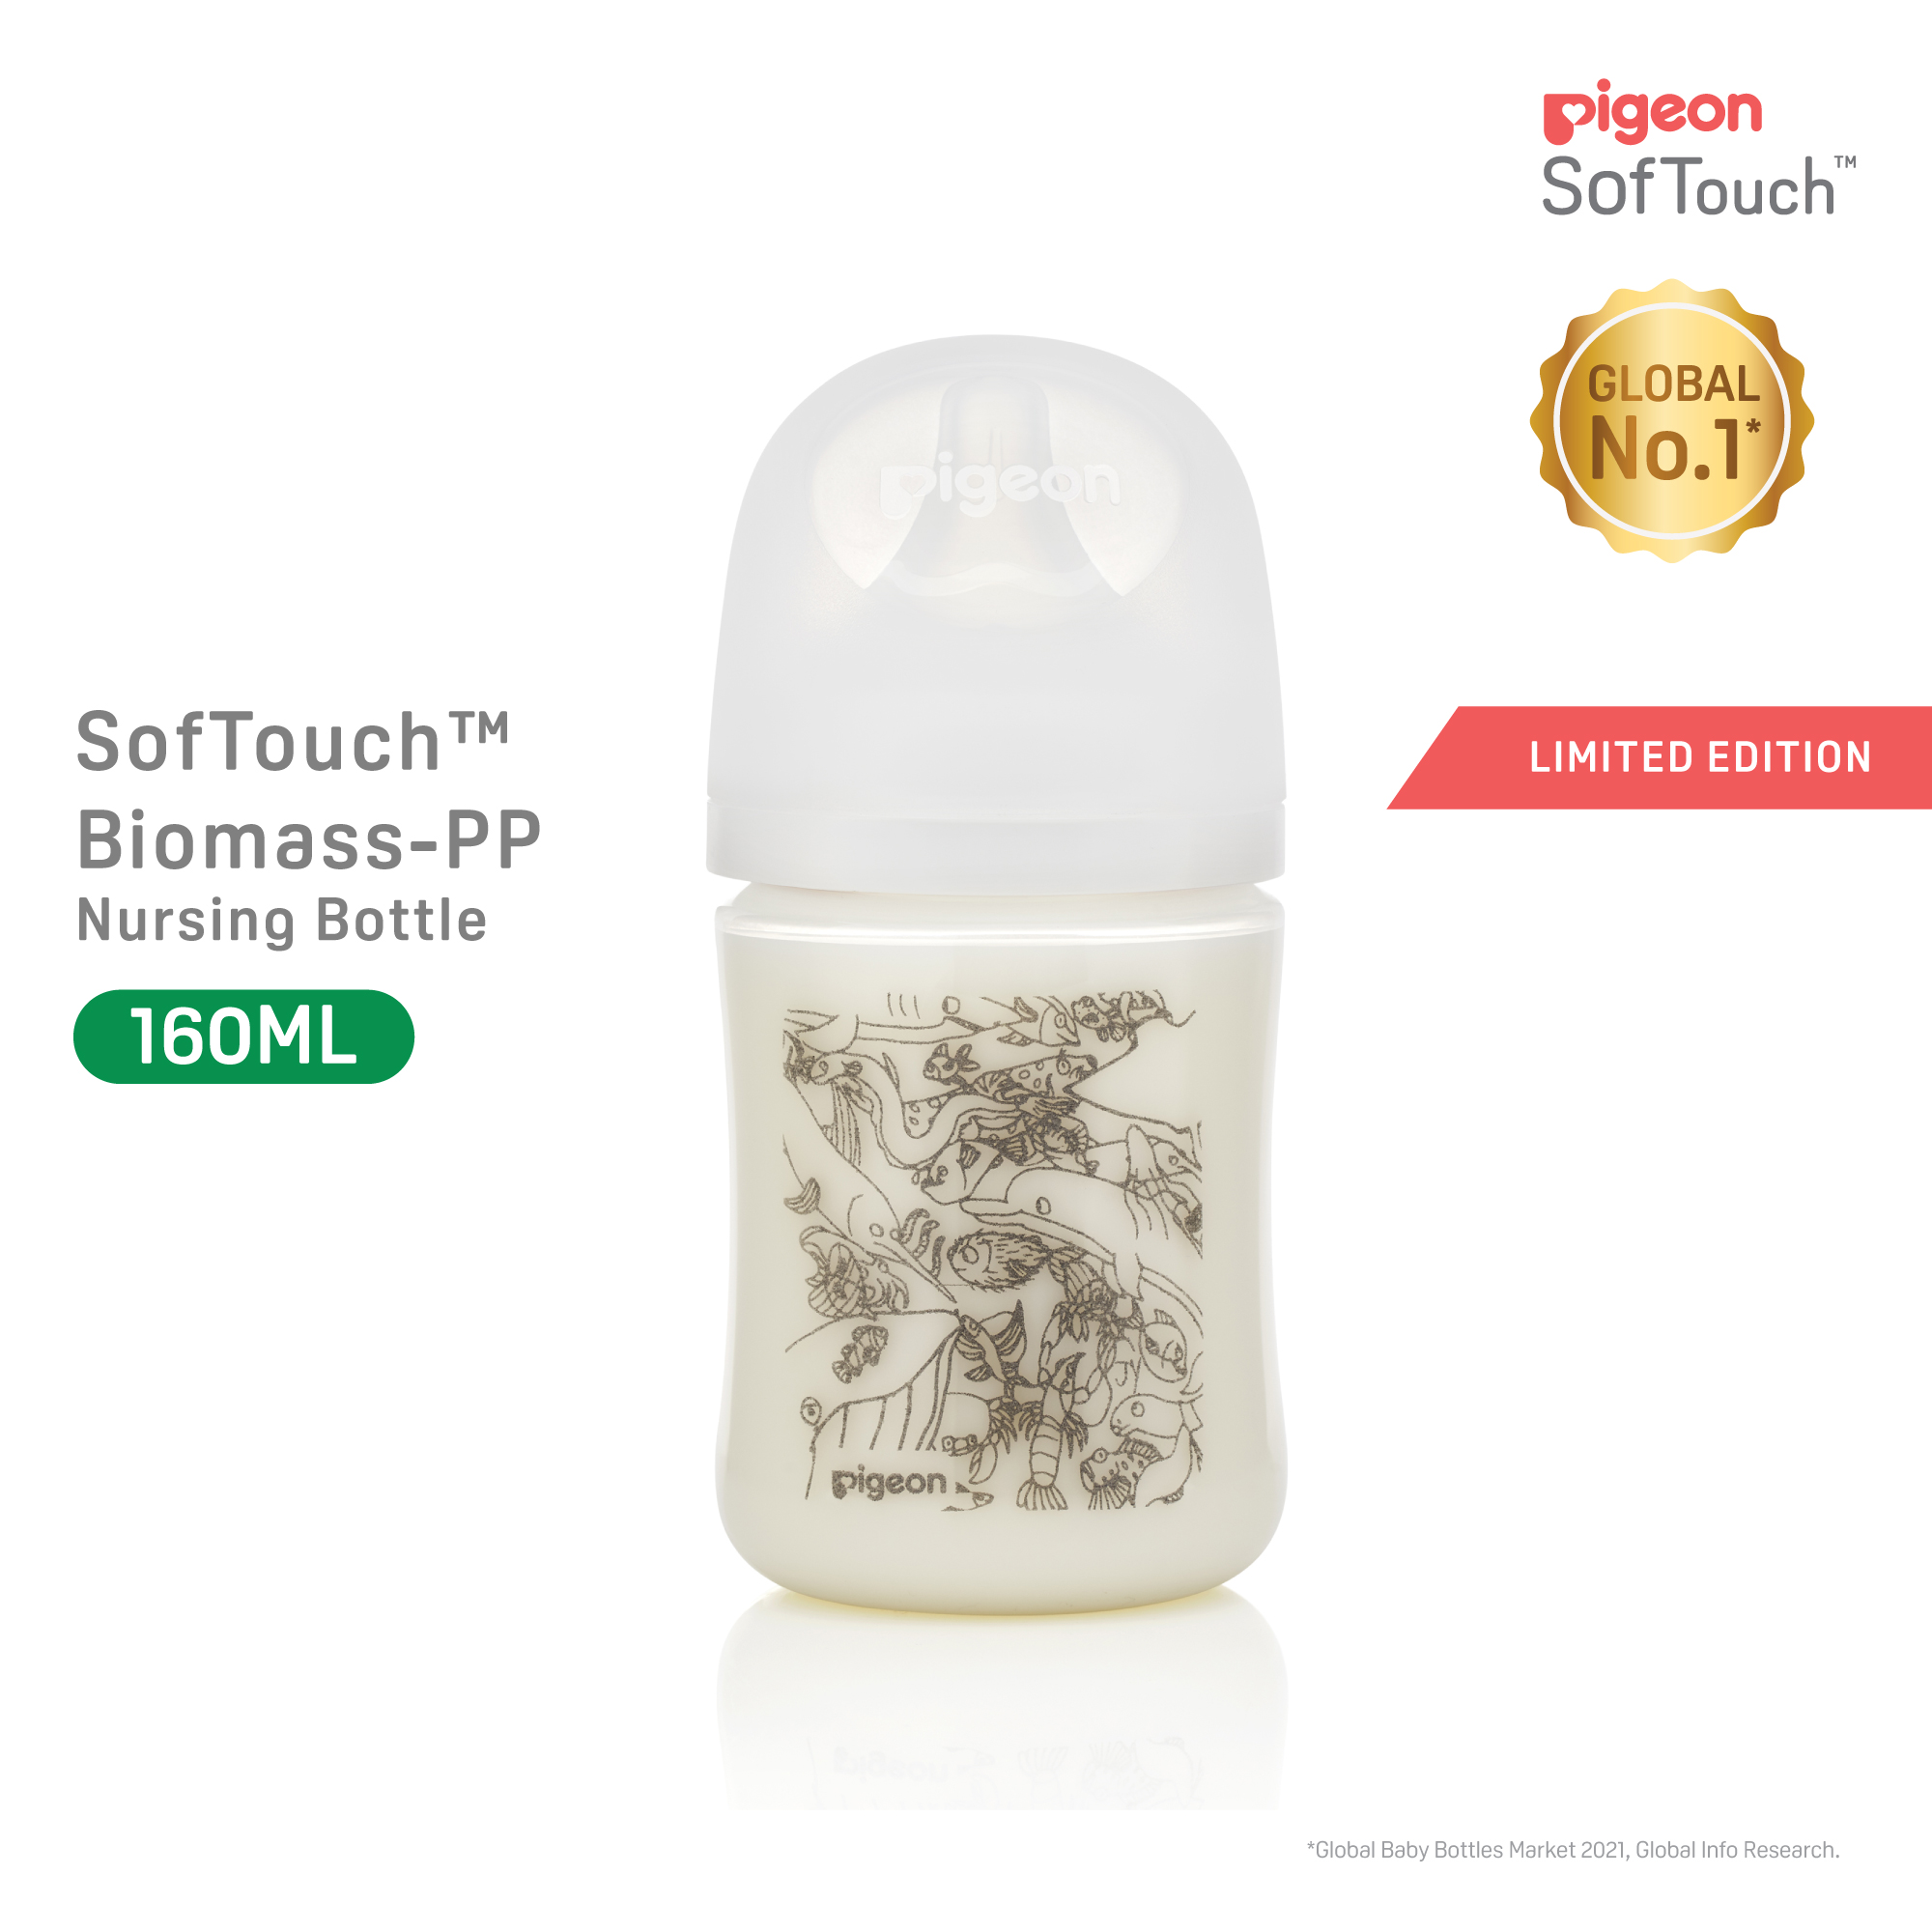 Pigeon SofTouch 3 Nursing Bottle Bio-Mass PP 160ml (PG-79794)